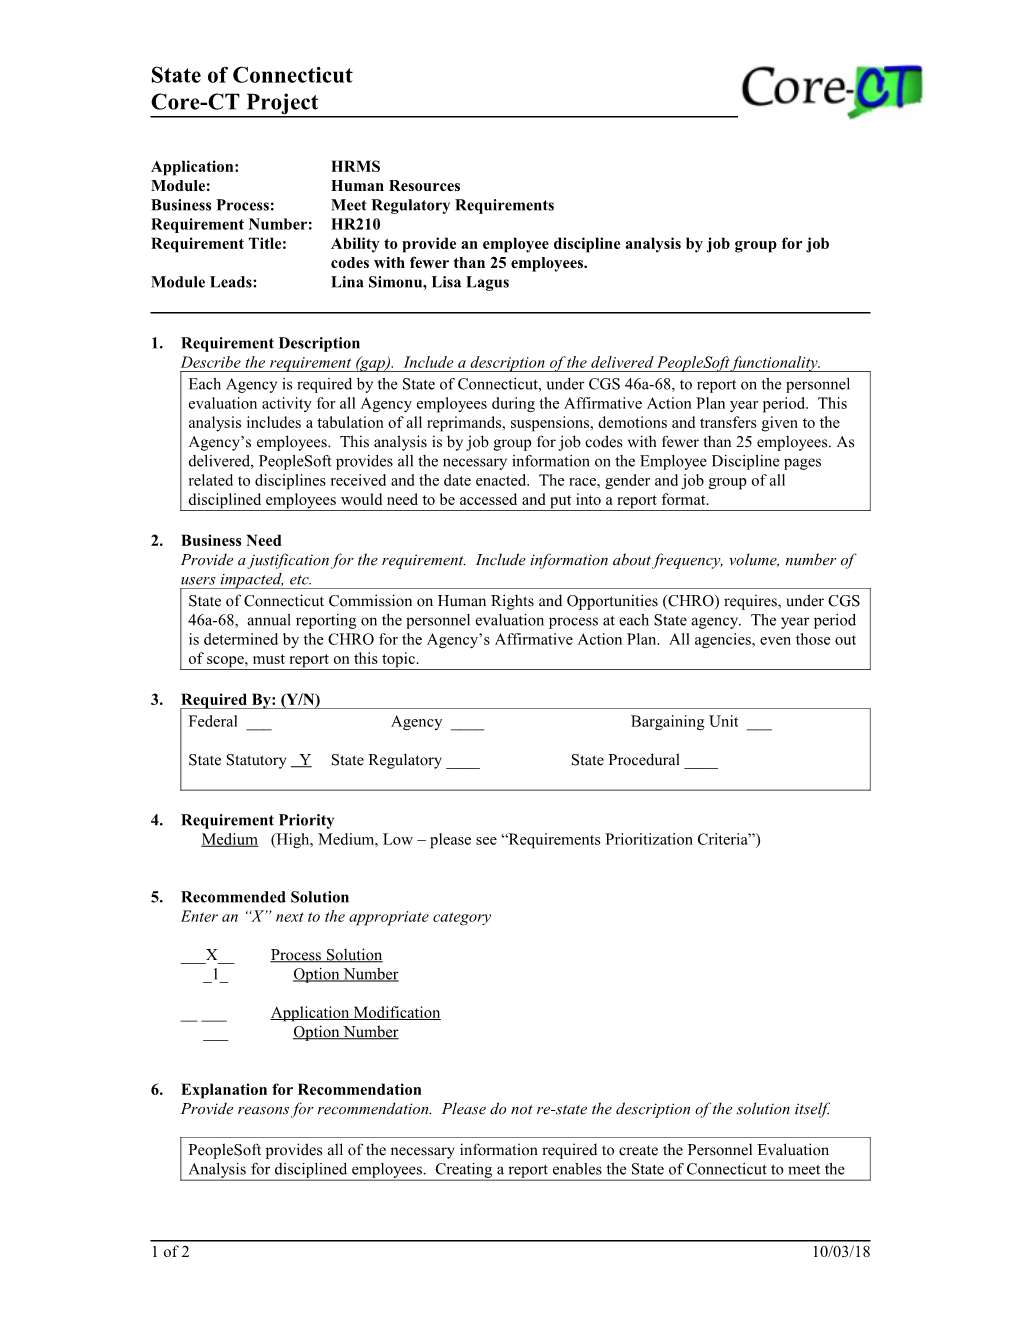 HR210 Personnel Discipline Analysis Report